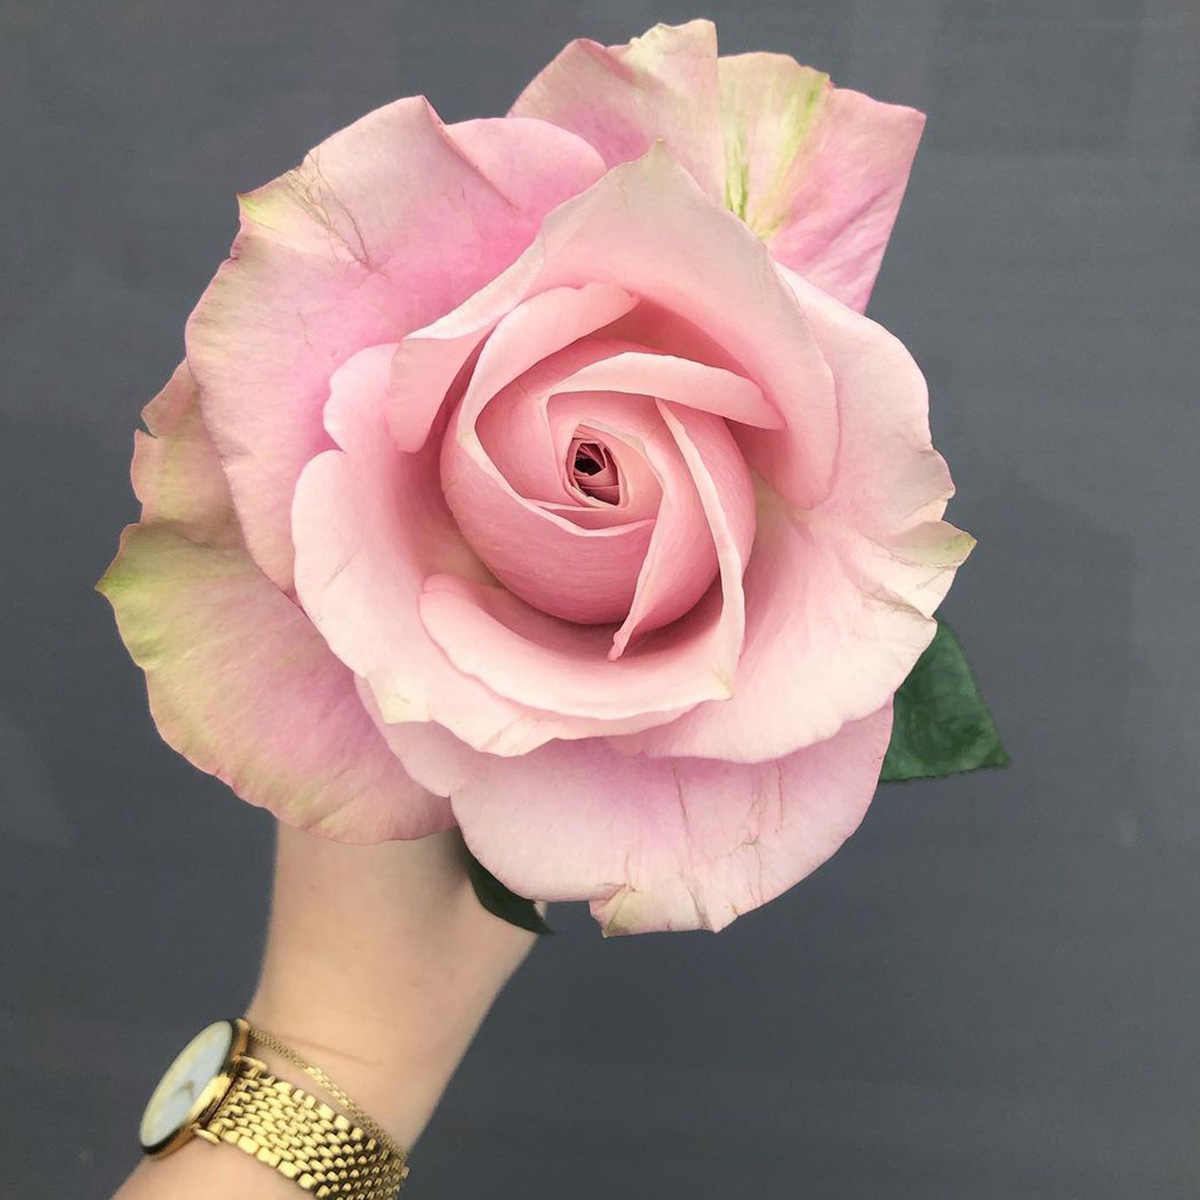 20 Flowers That Fit Into Your Genuine Pink Color Palette - Rose Secret Garden 2